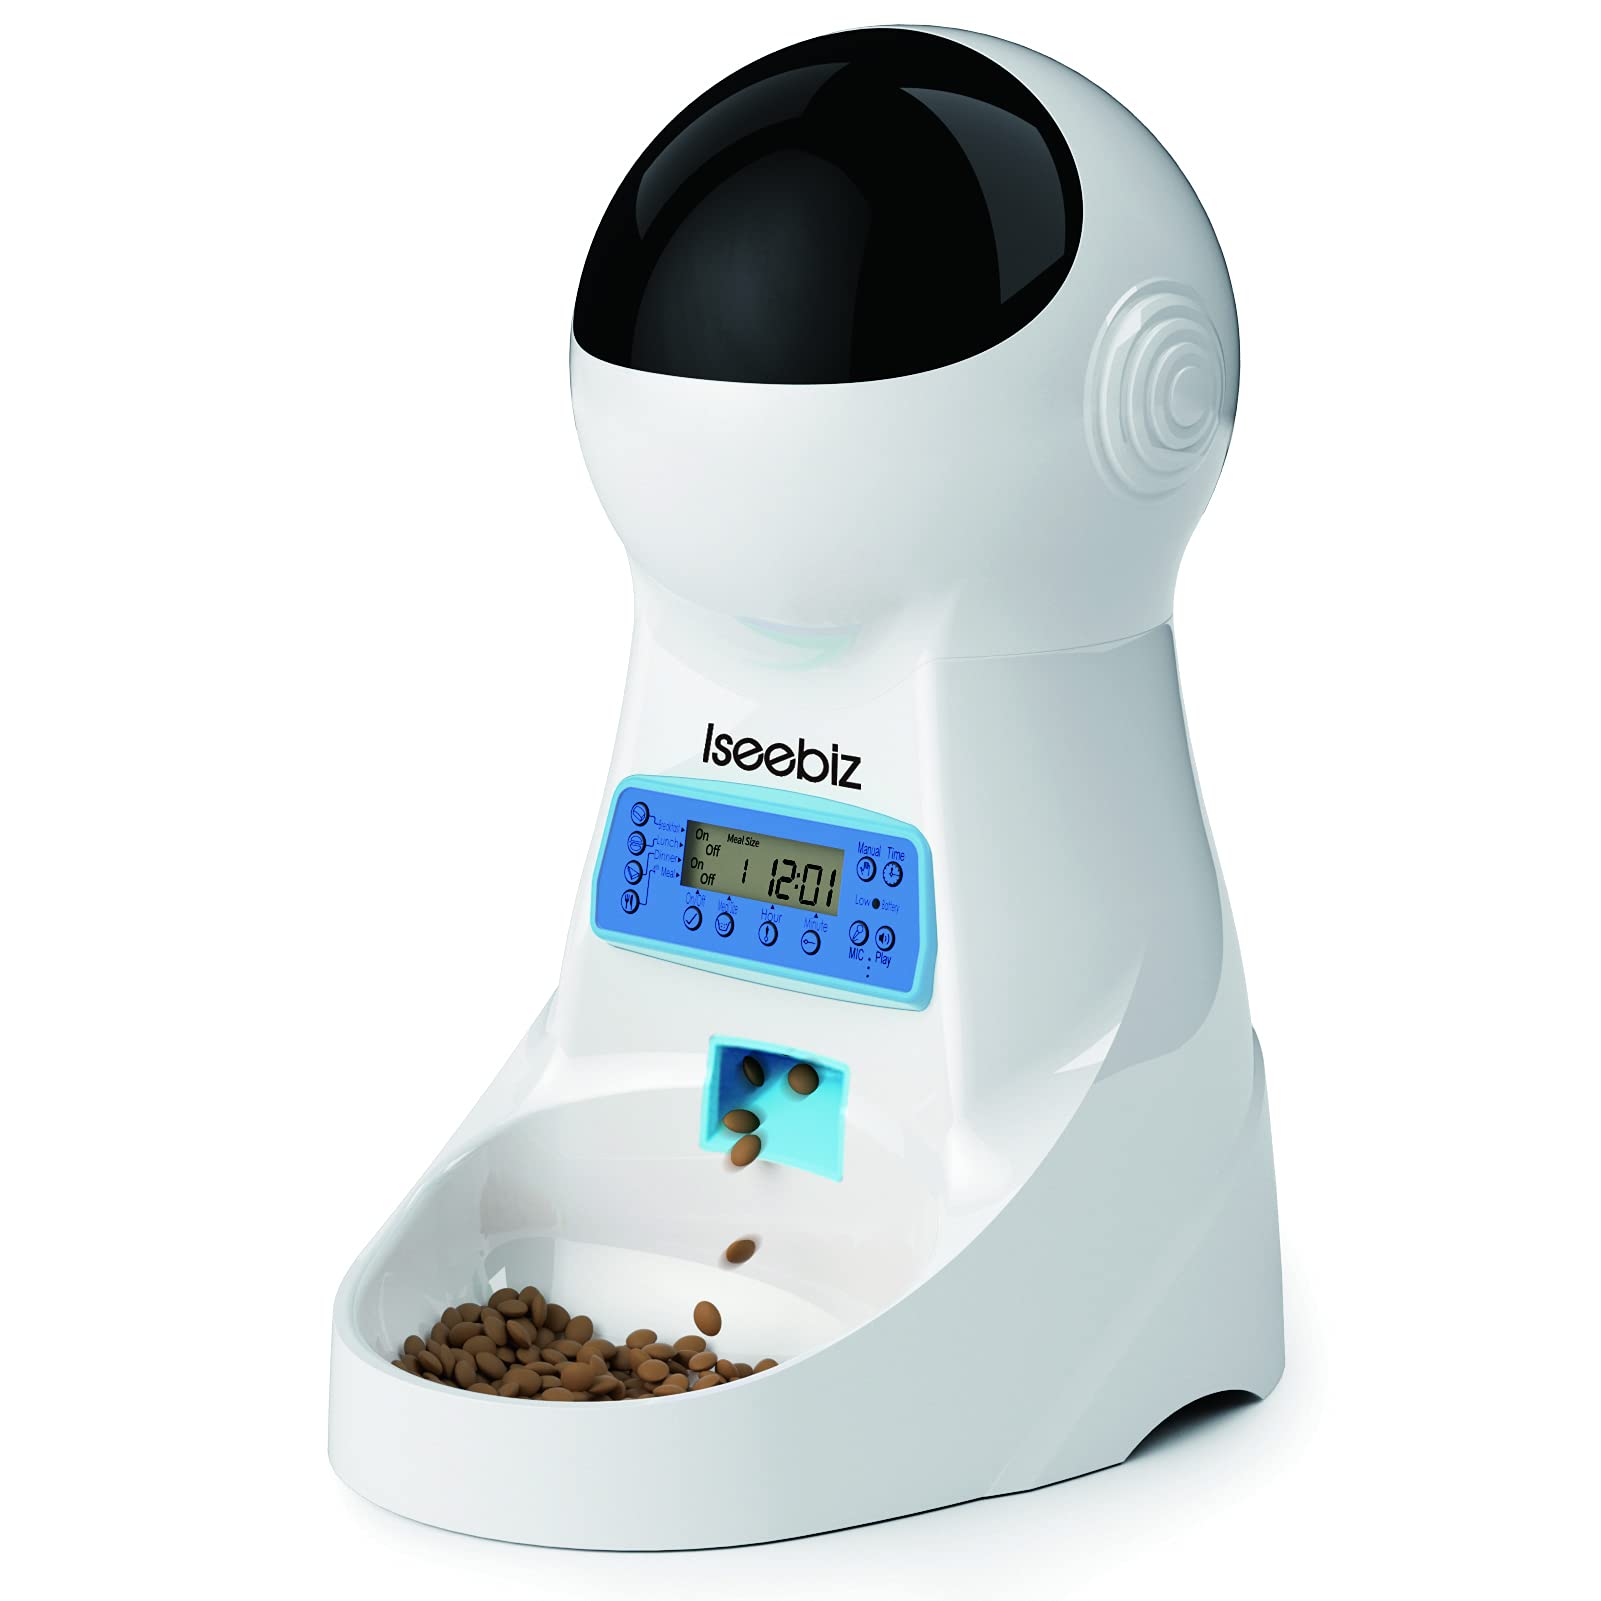 Iseebiz Automatic Pet Feeder 5L Smart Feeder Dog Cat Food Dispenser Voice Recording,Timer Programmable, Portion Control, IR Detect, 8 Meals Per Day...